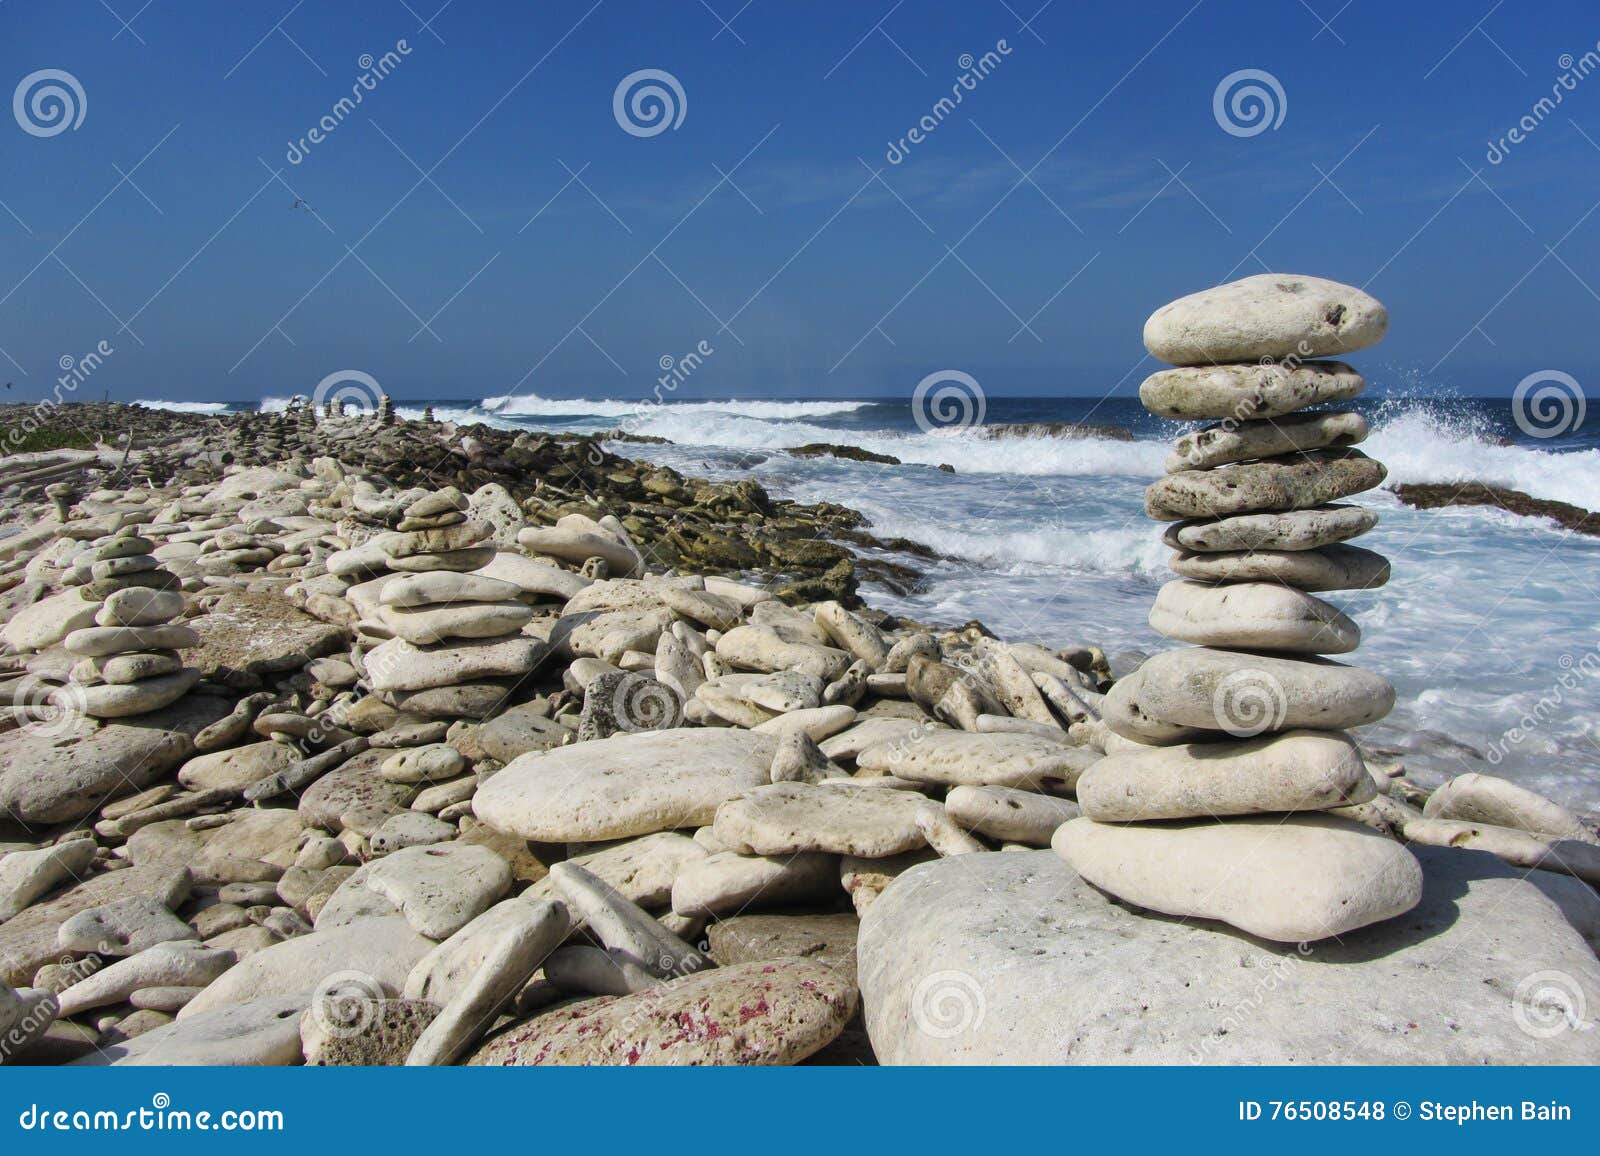 coral rock piles